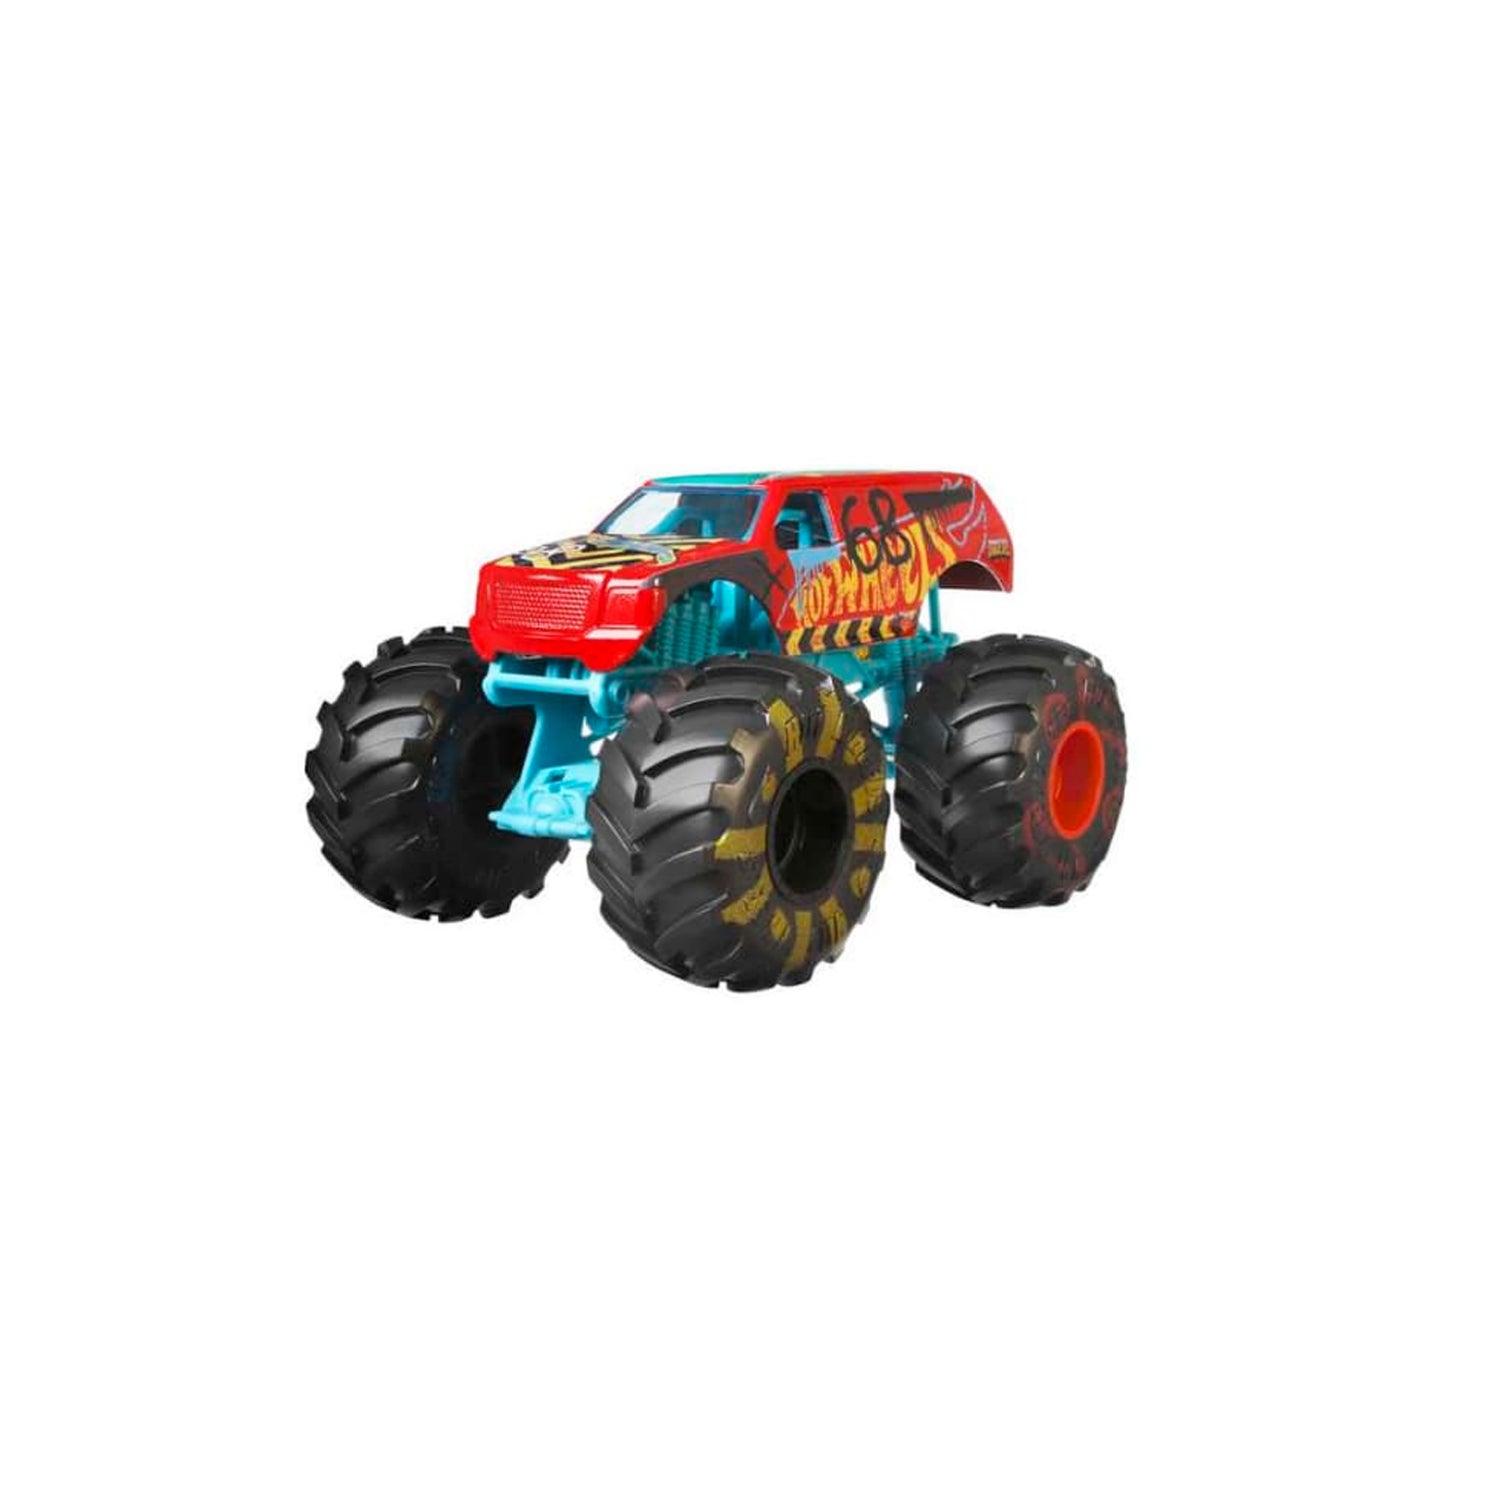 Hot Wheels 1:64 Car Monster Trucks Assortment Metal Toy Lover